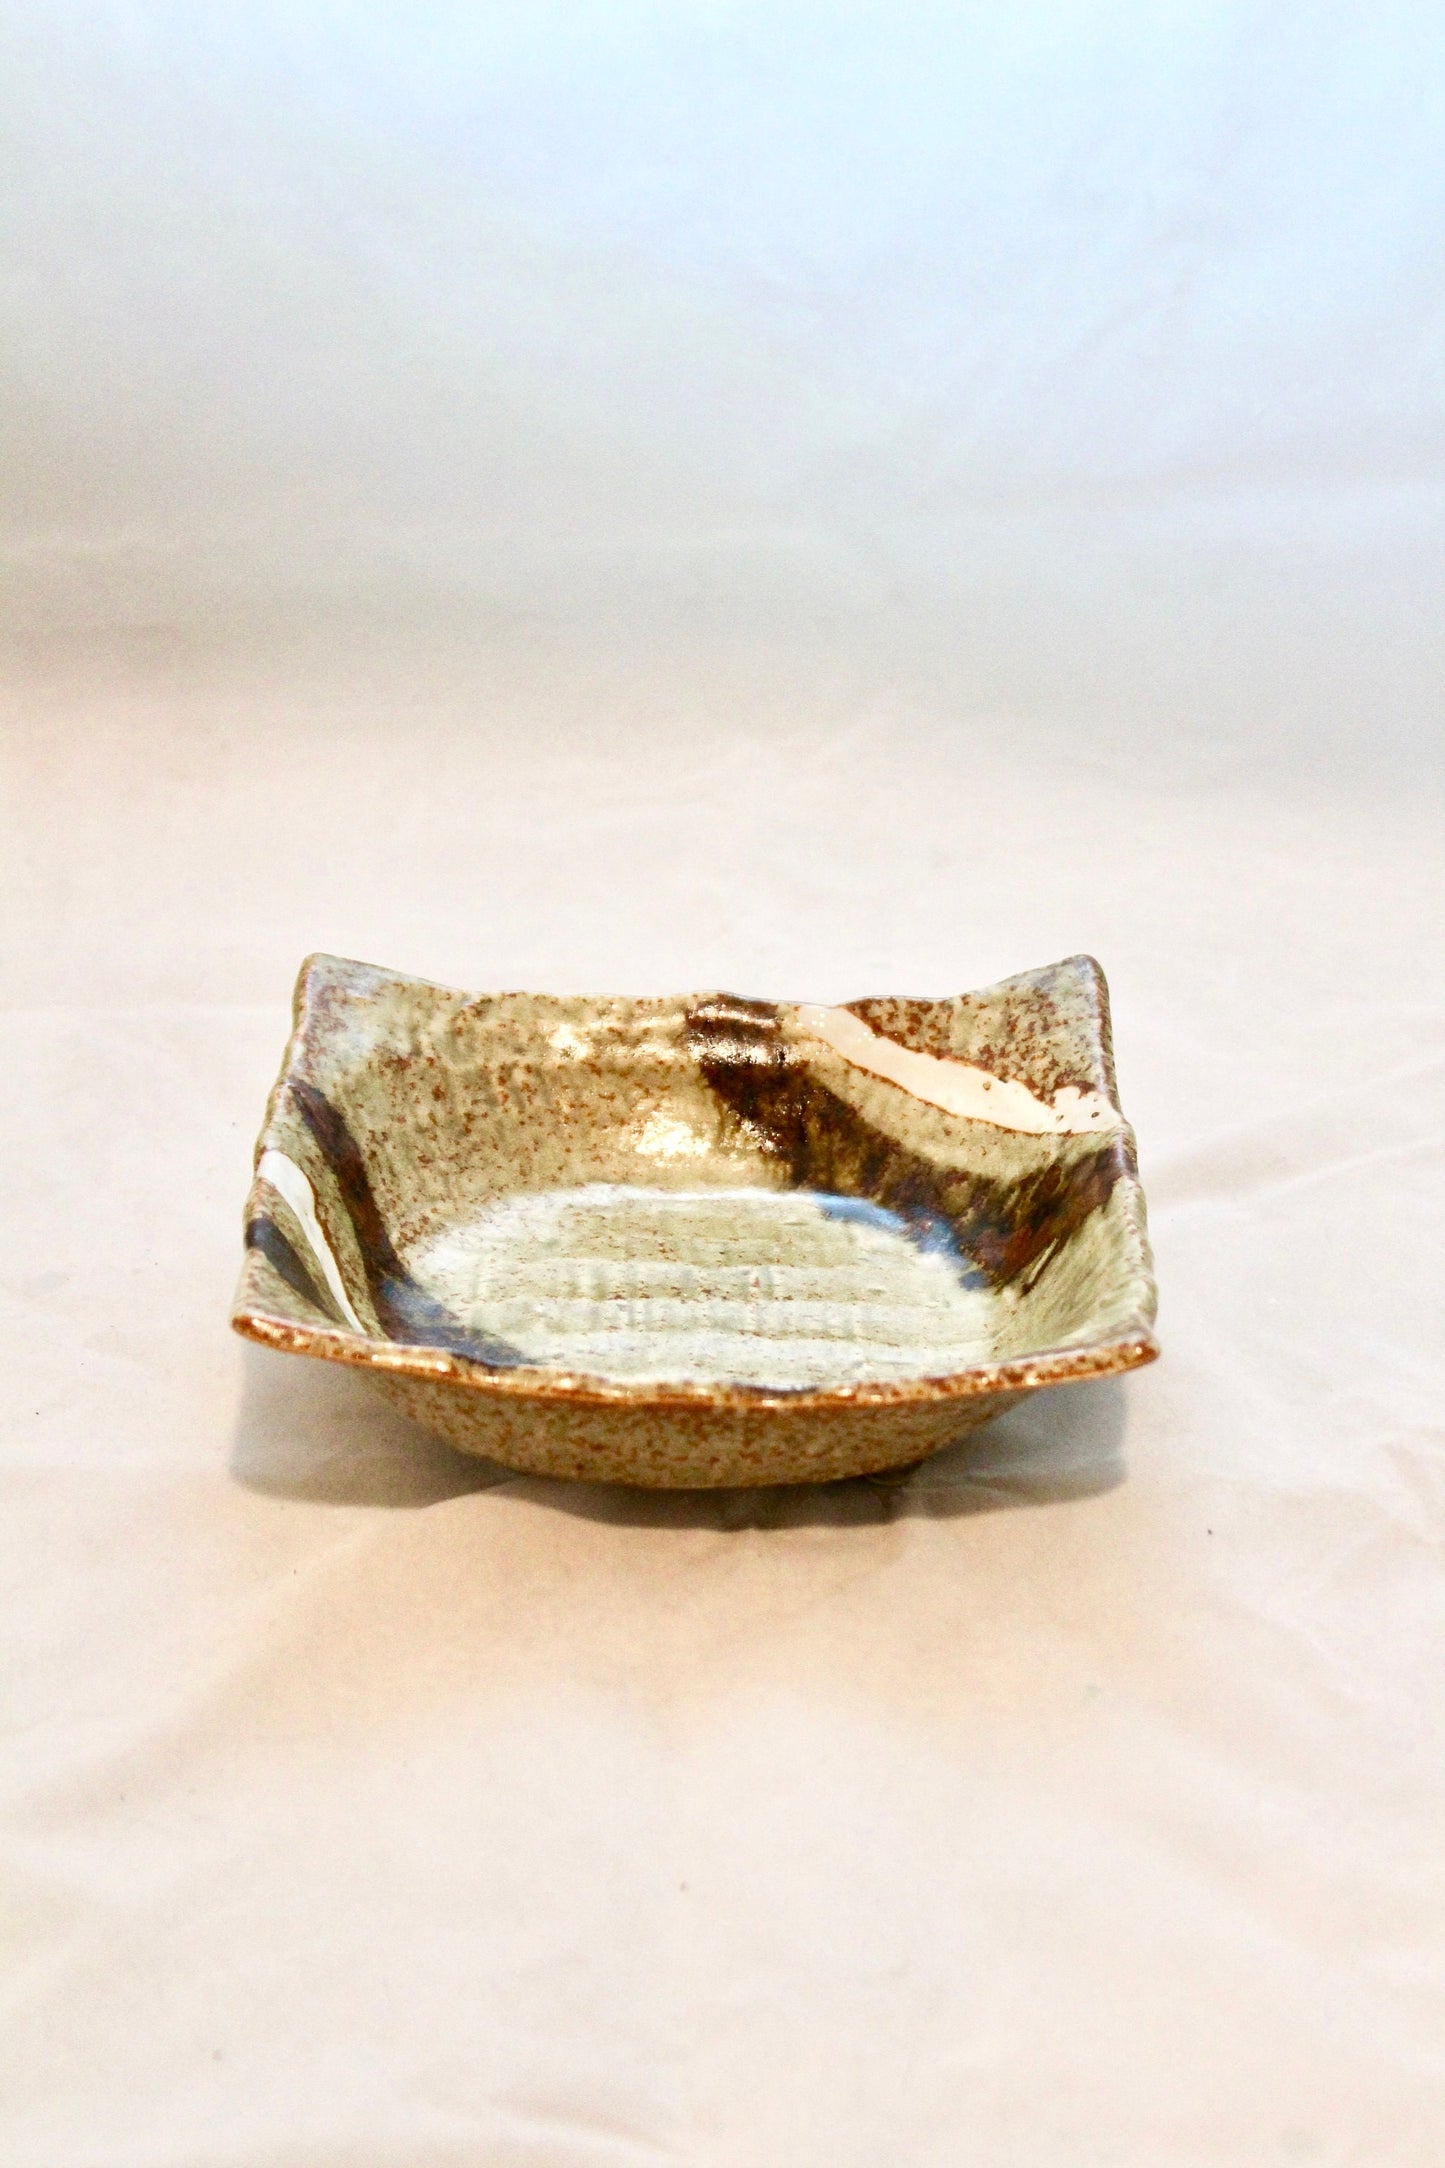 Square Grazed brown/white designed Ceramic Saucers for Medium Kokedama. 6 x 6 x 1.7 inch tall